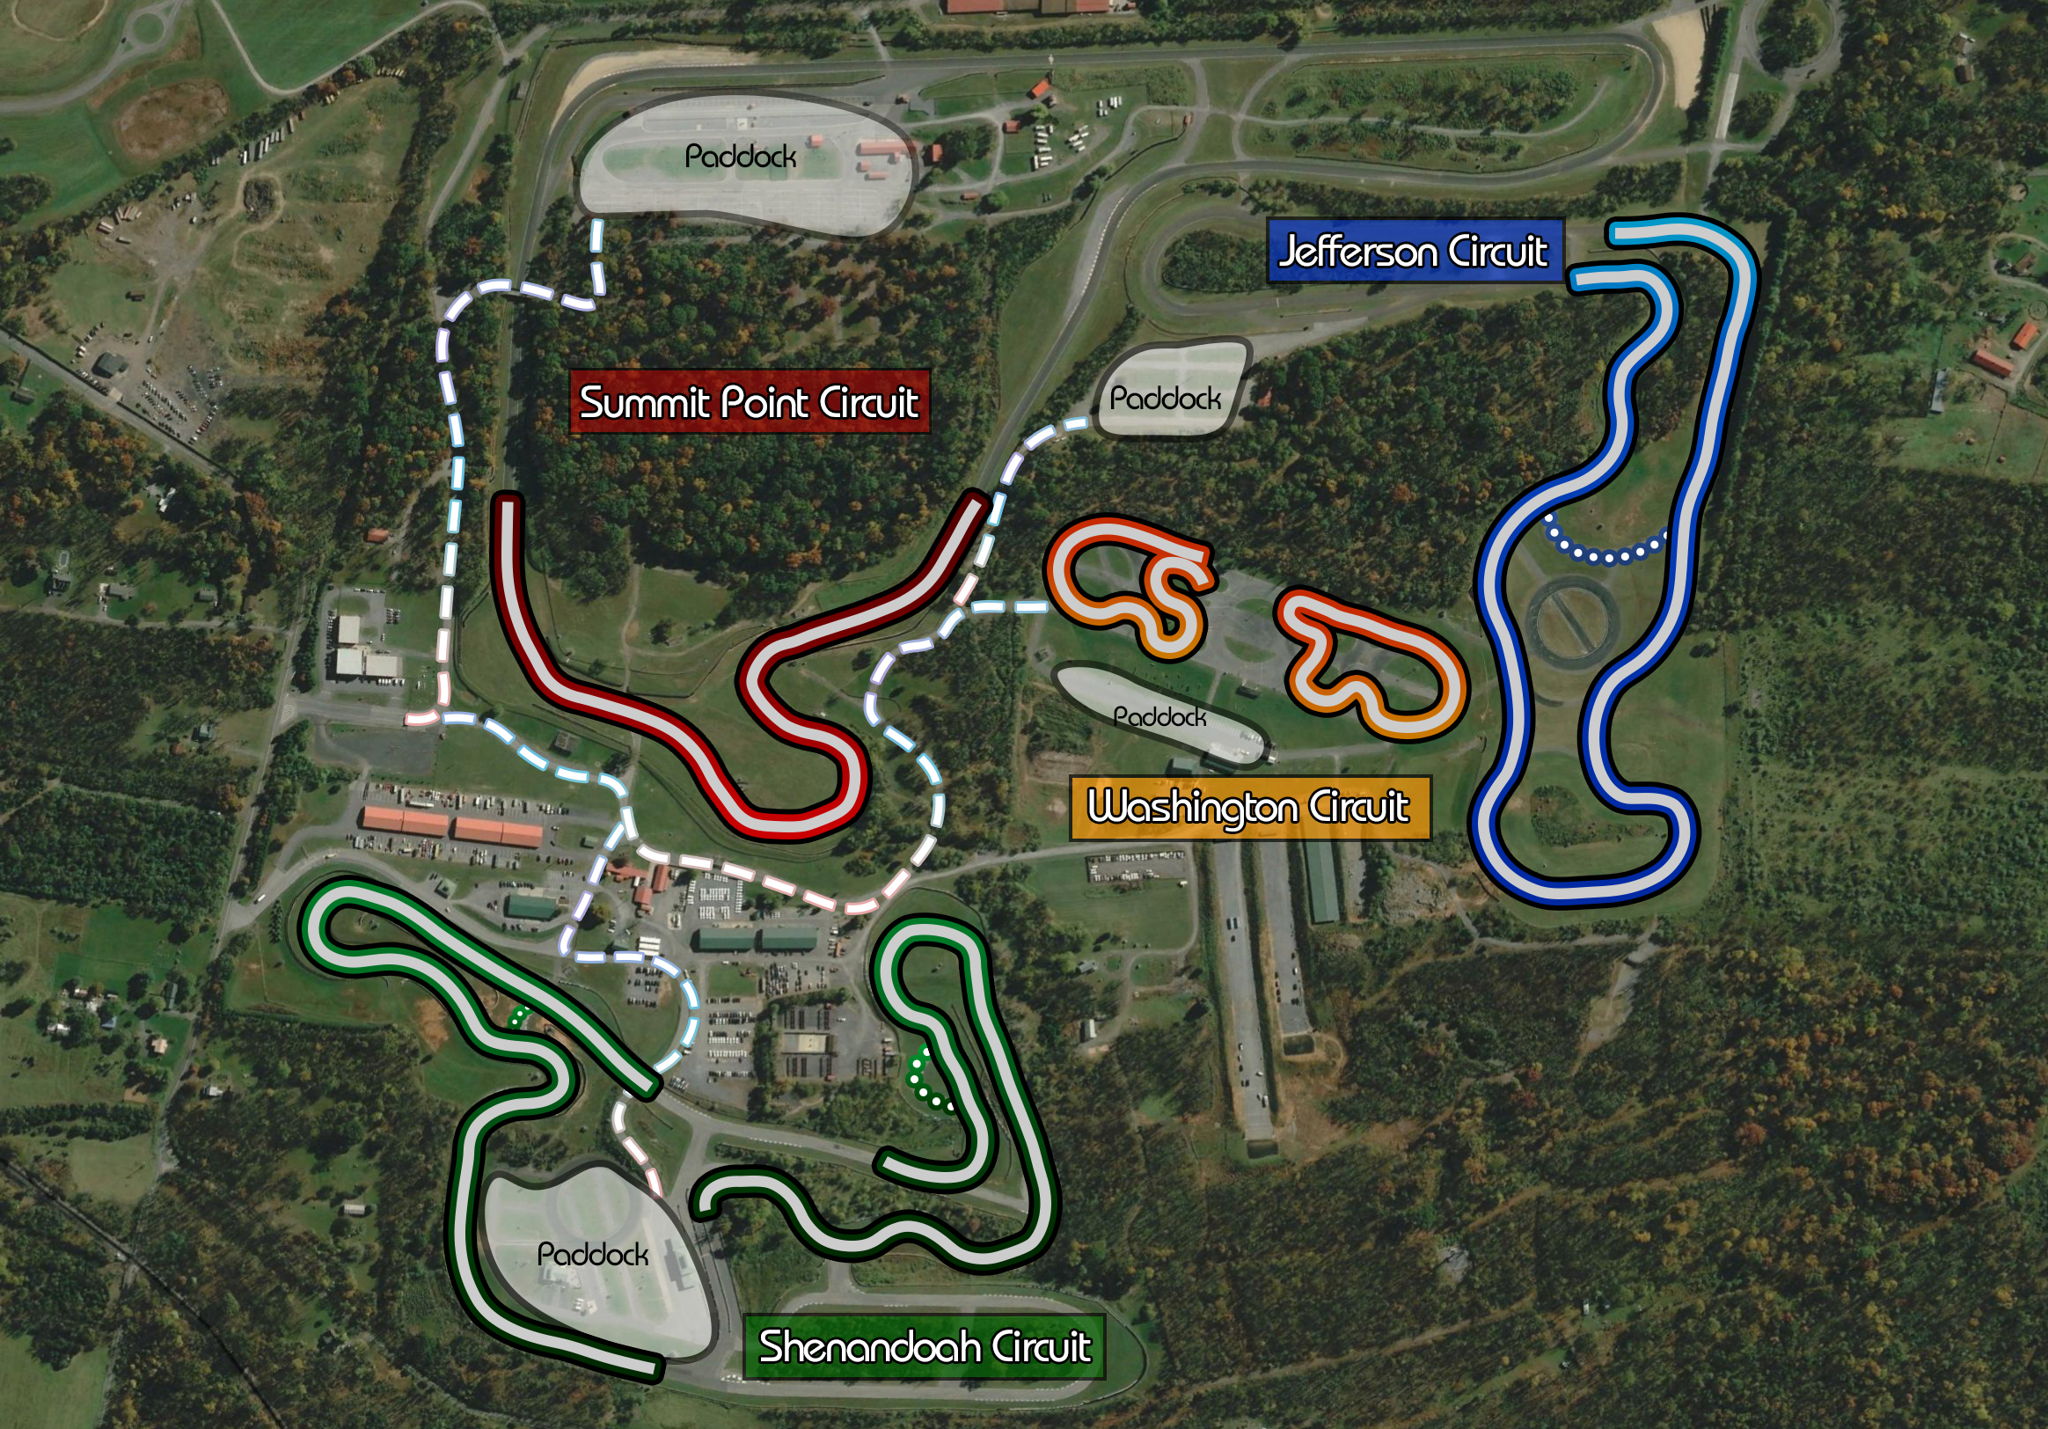 Drift Nirvana Drift Games - Summit Point Motorsports Park